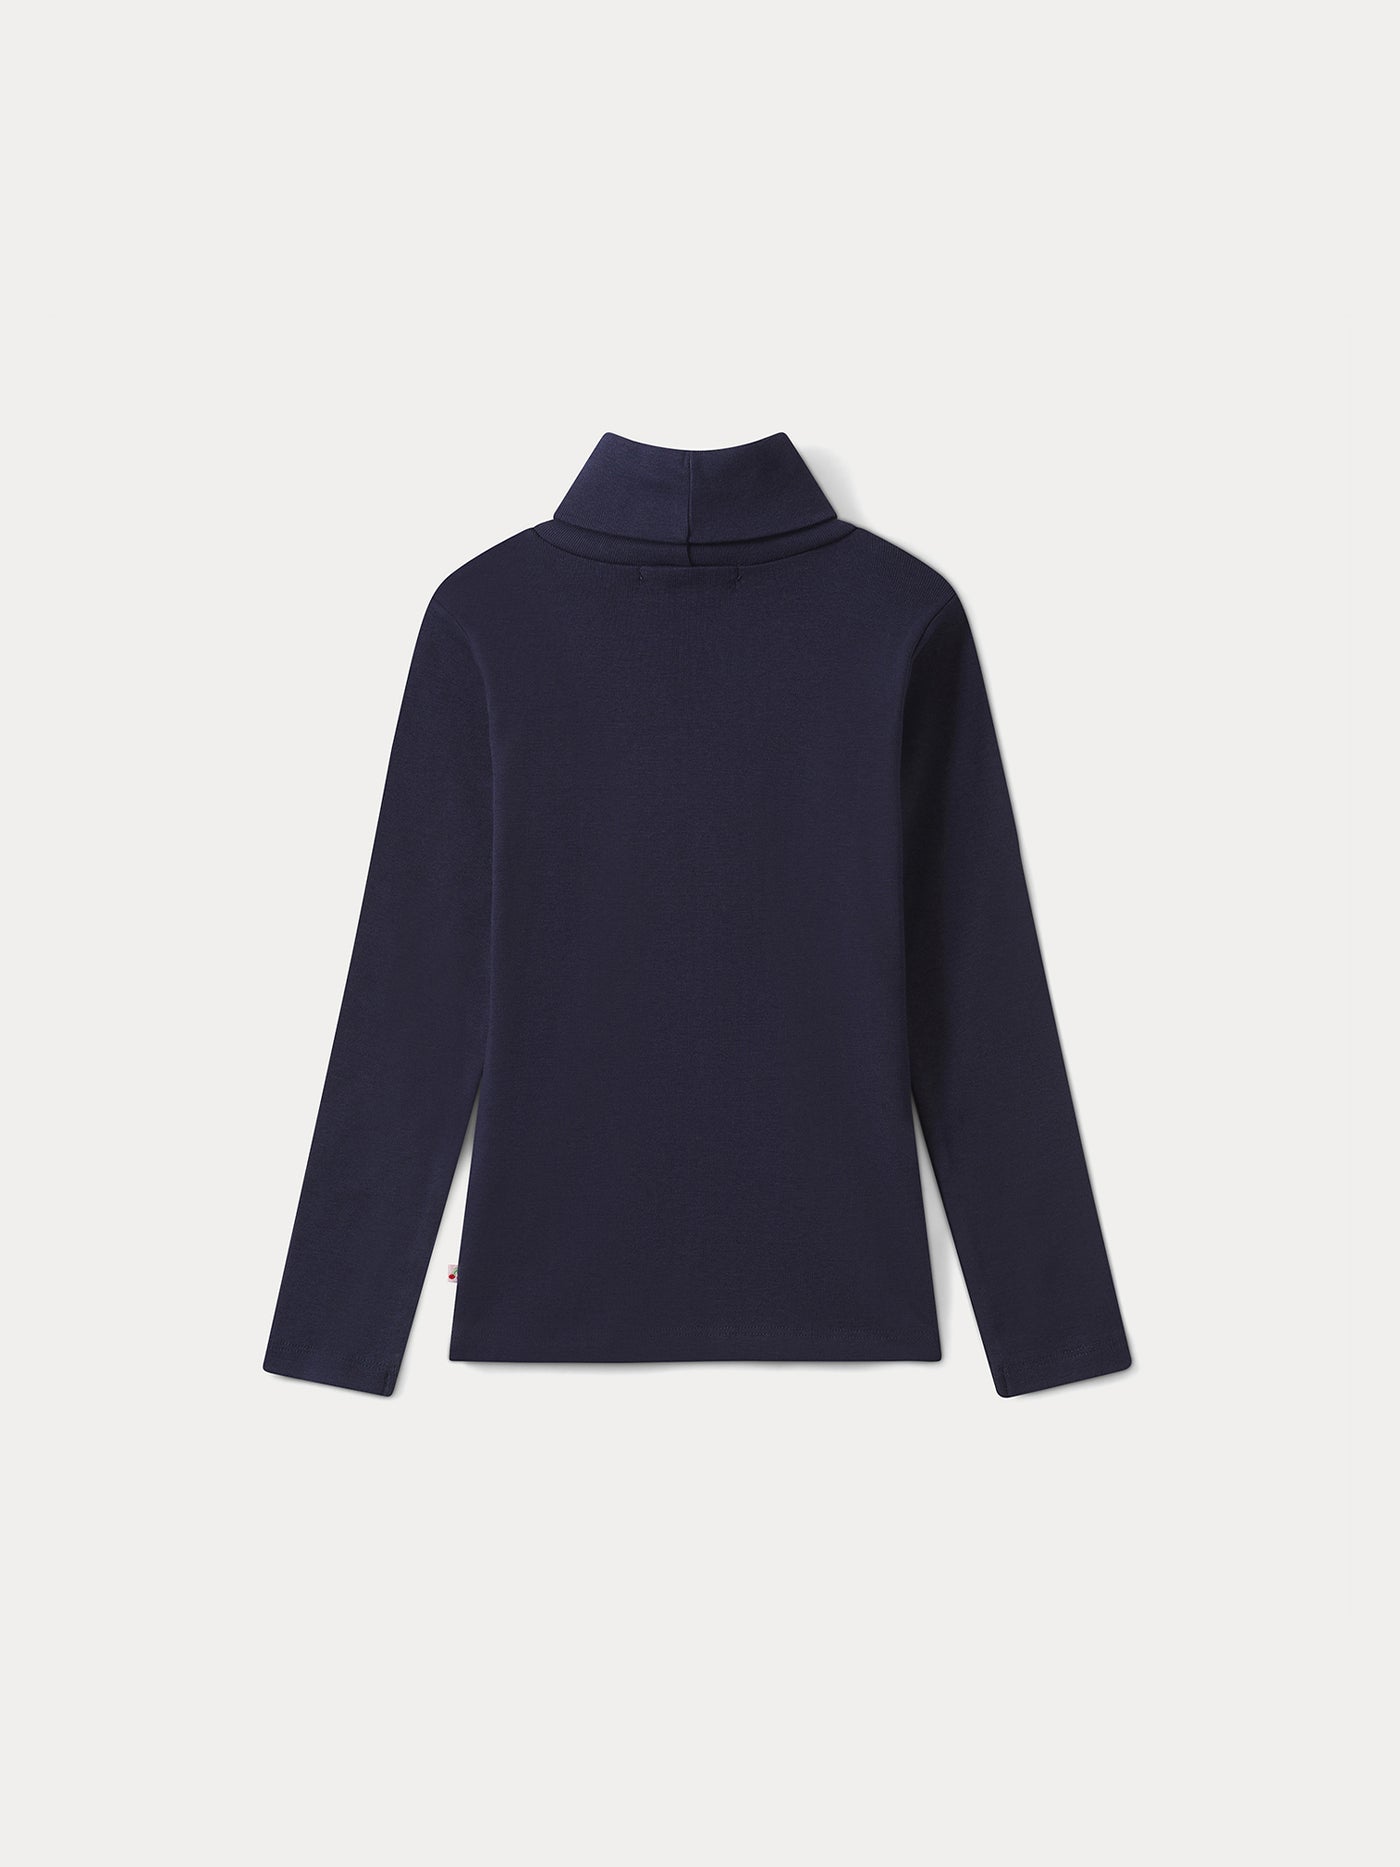 Thin turtleneck sweater navy